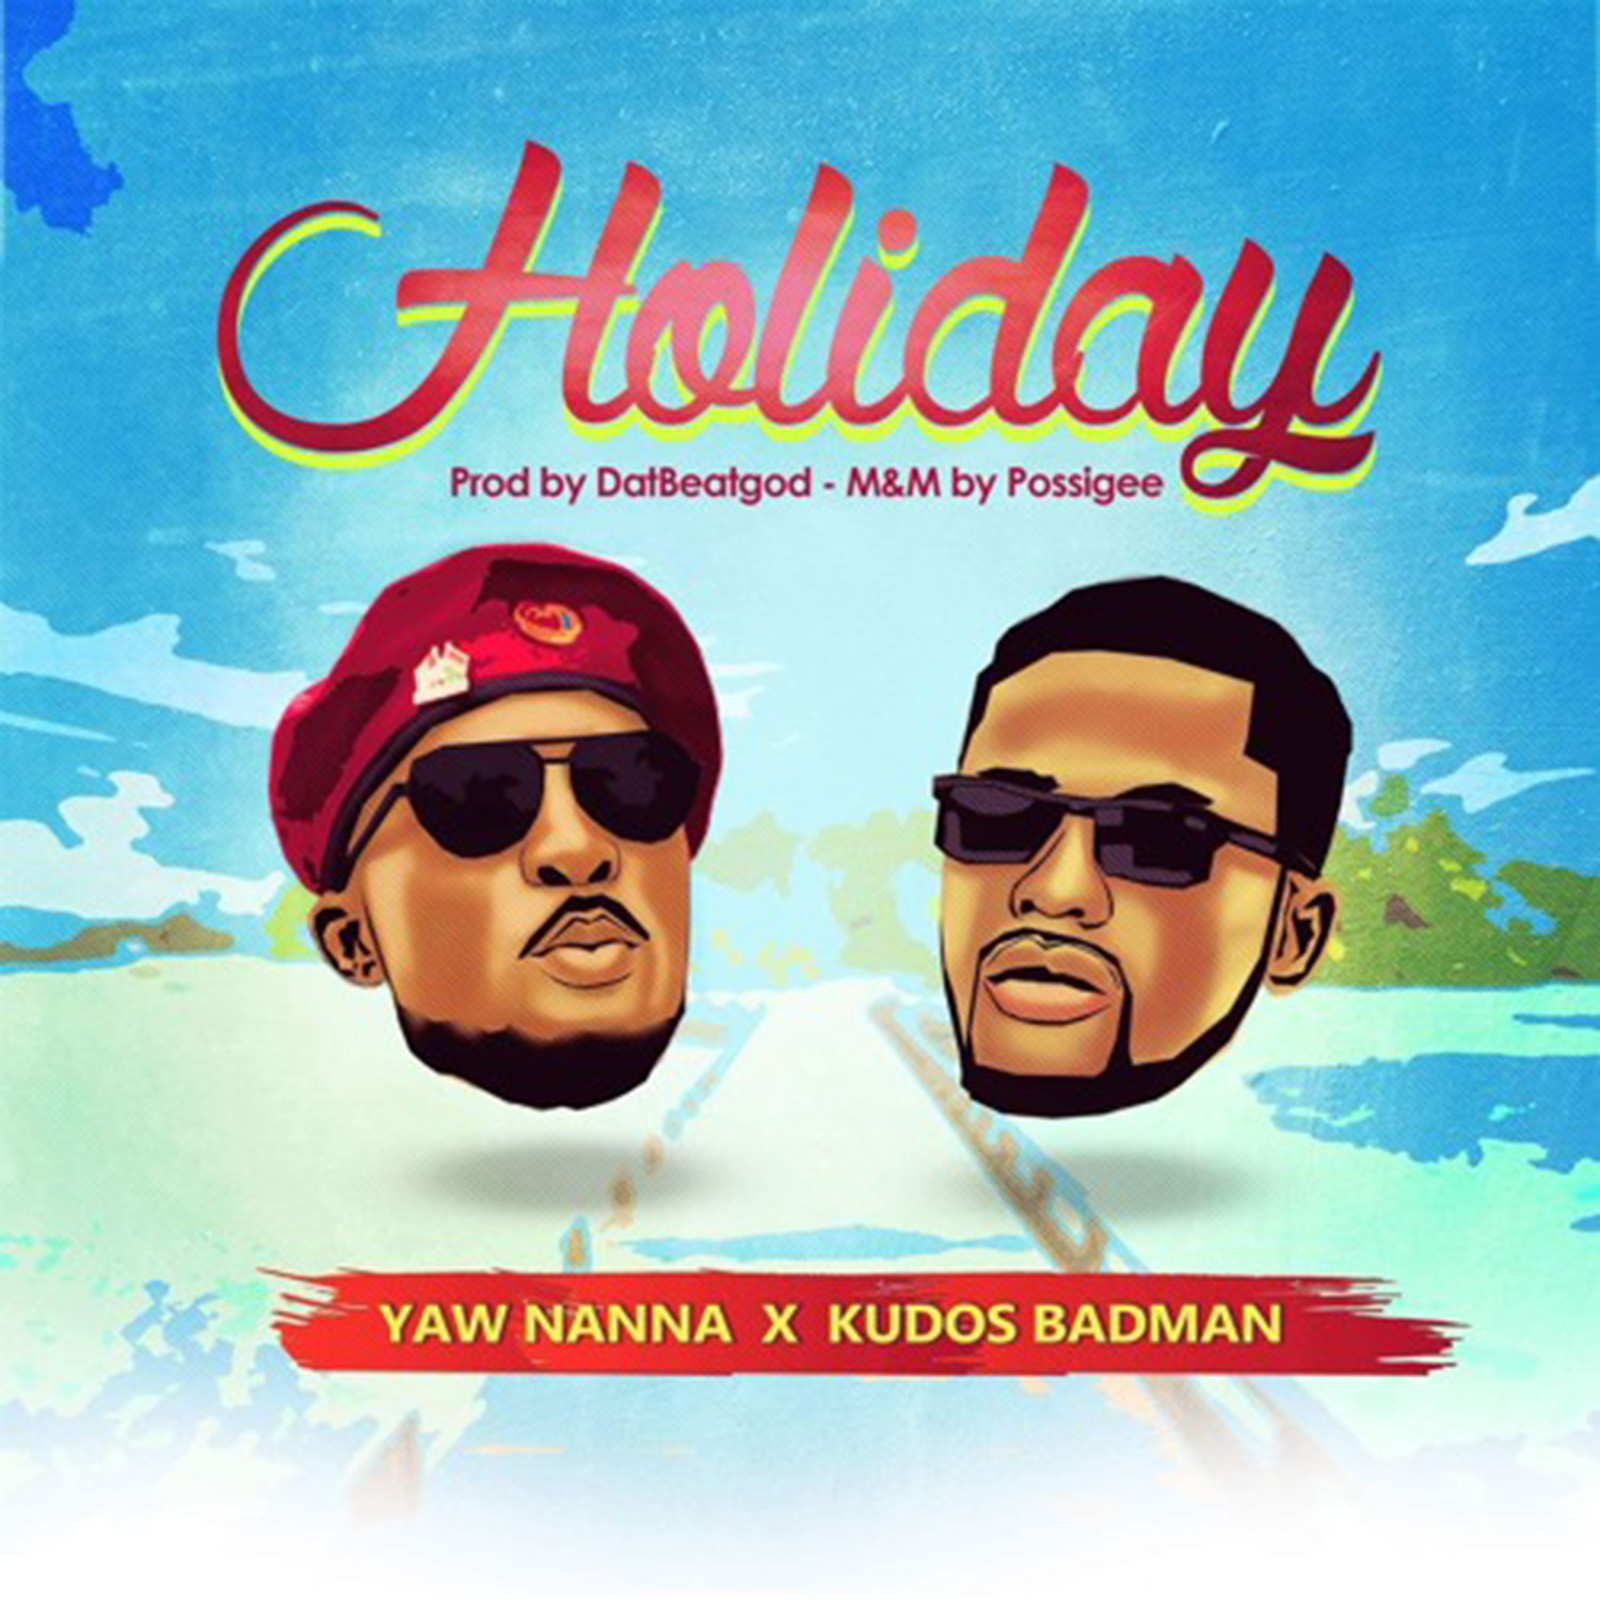 Holiday by Yaw Nanna feat. Kudos Badman